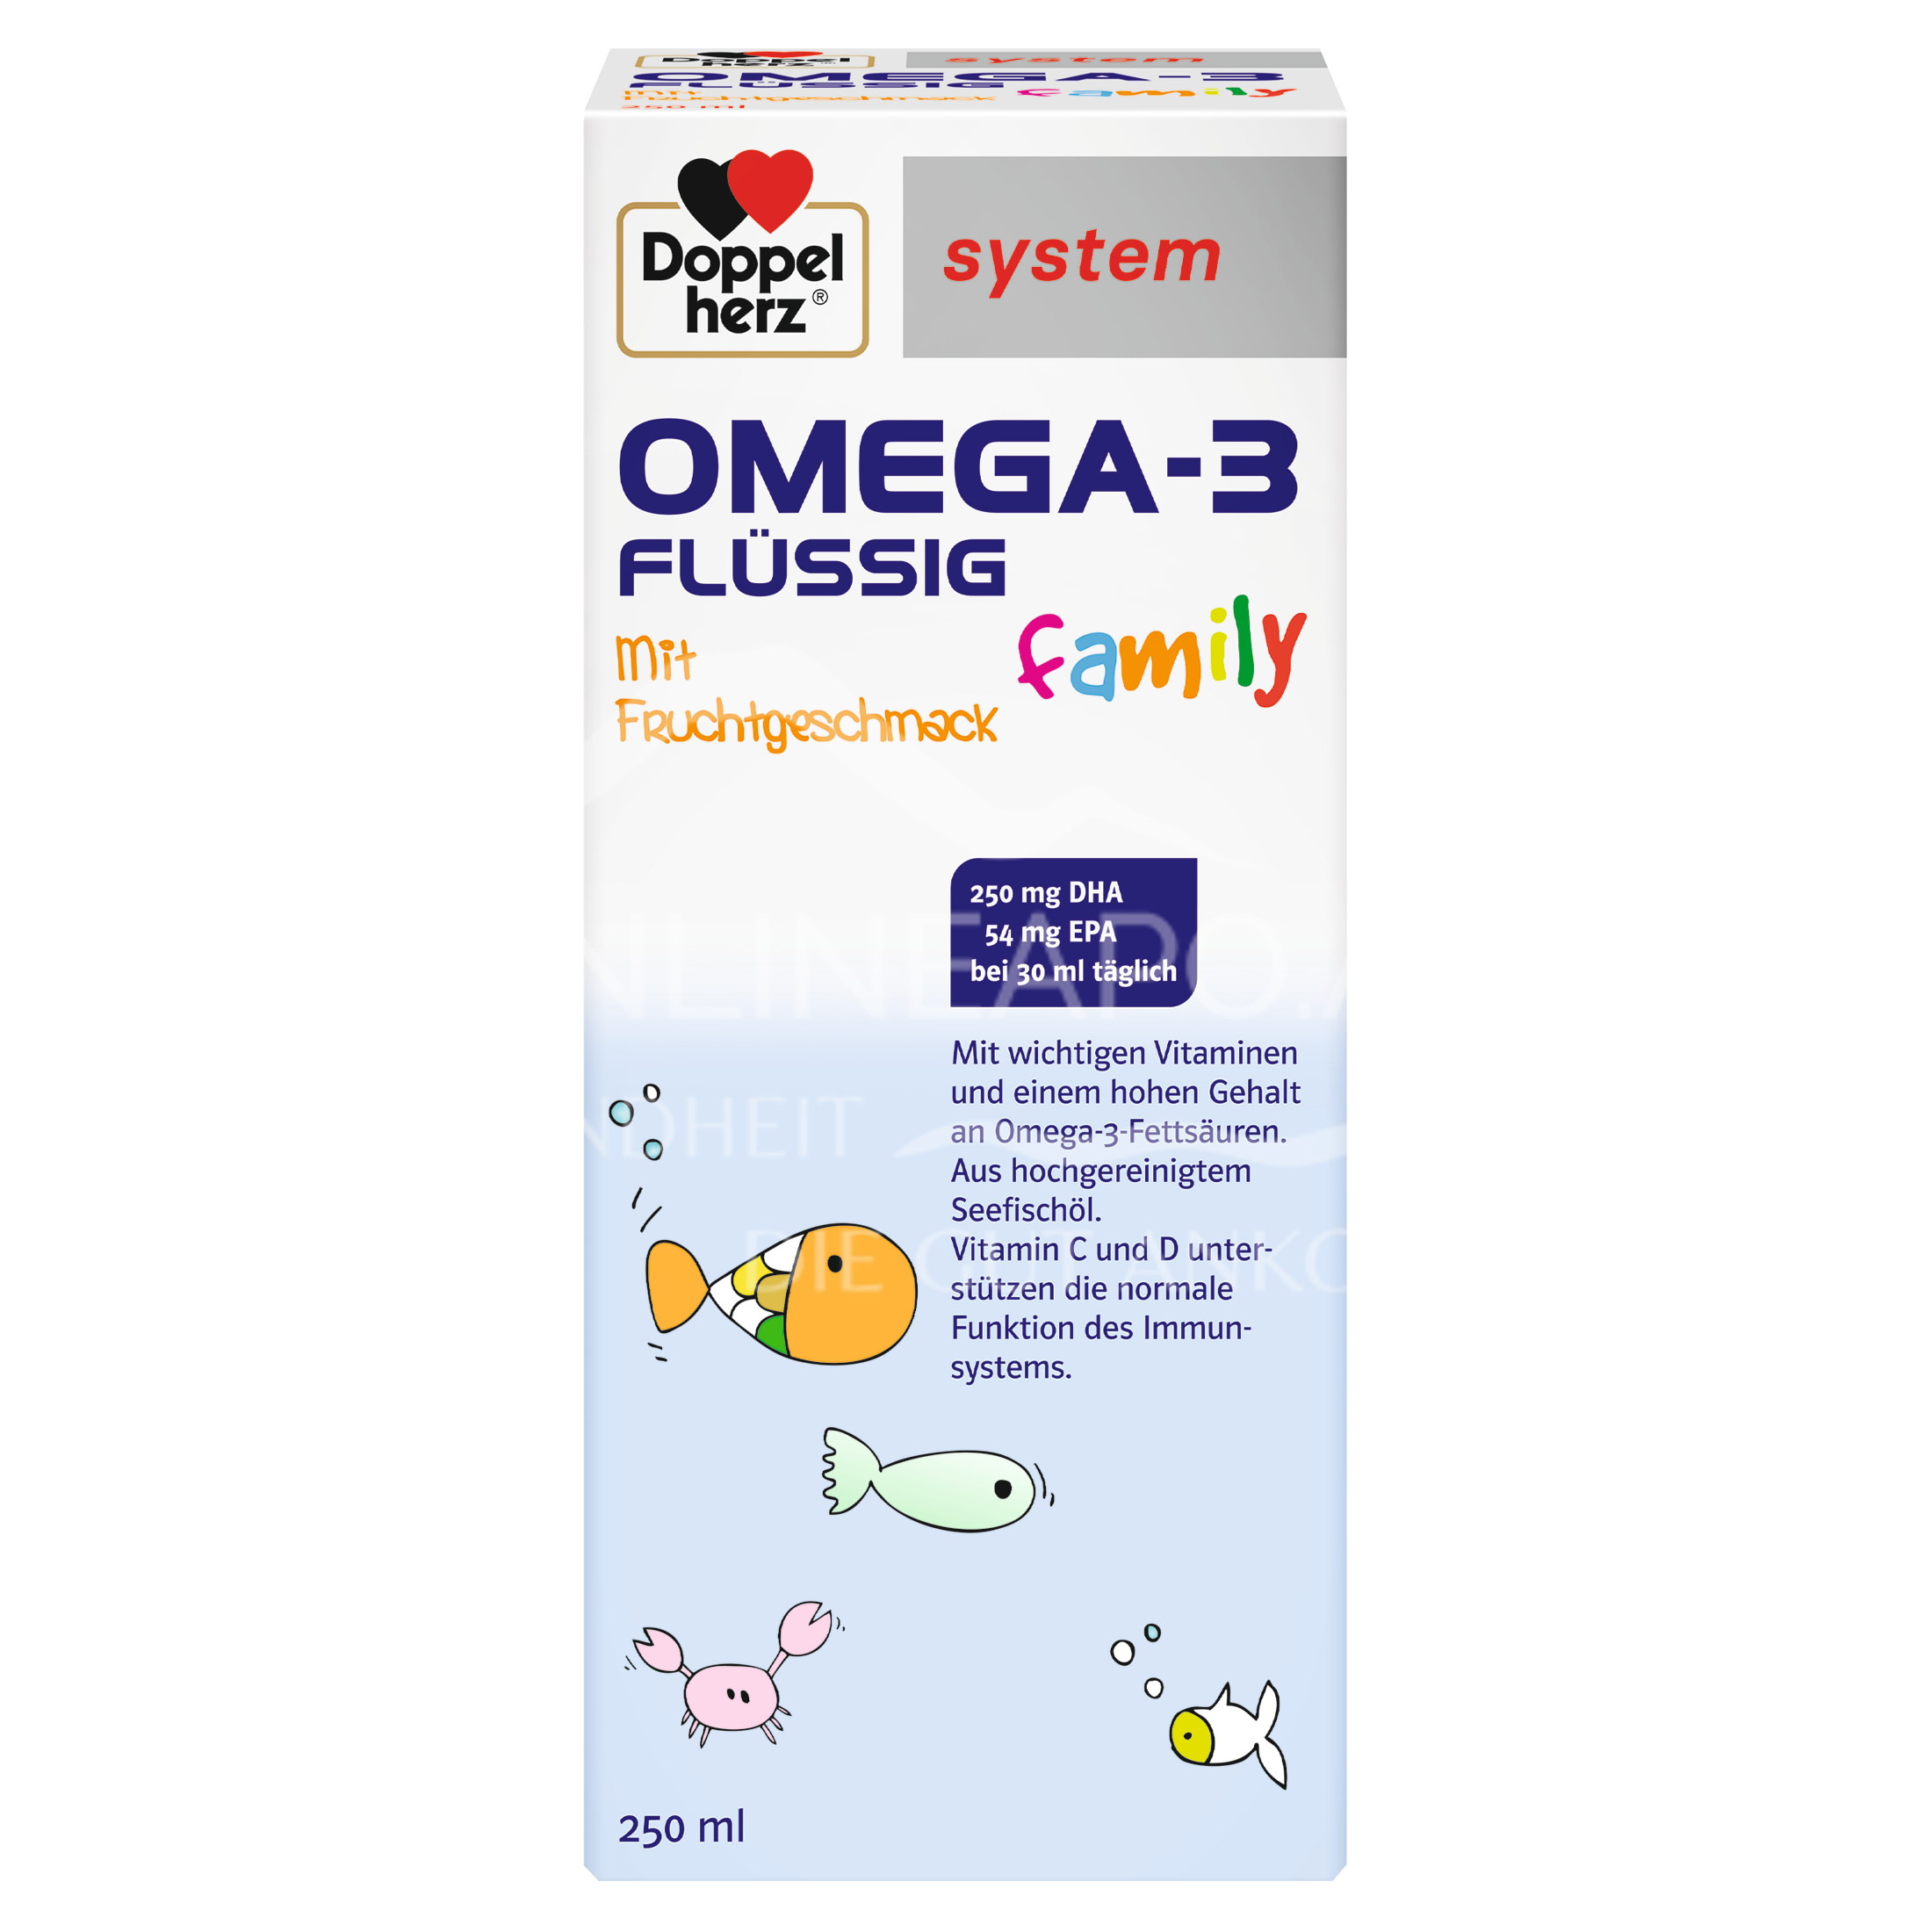 Doppelherz system OMEGA-3 family FLÜSSIG